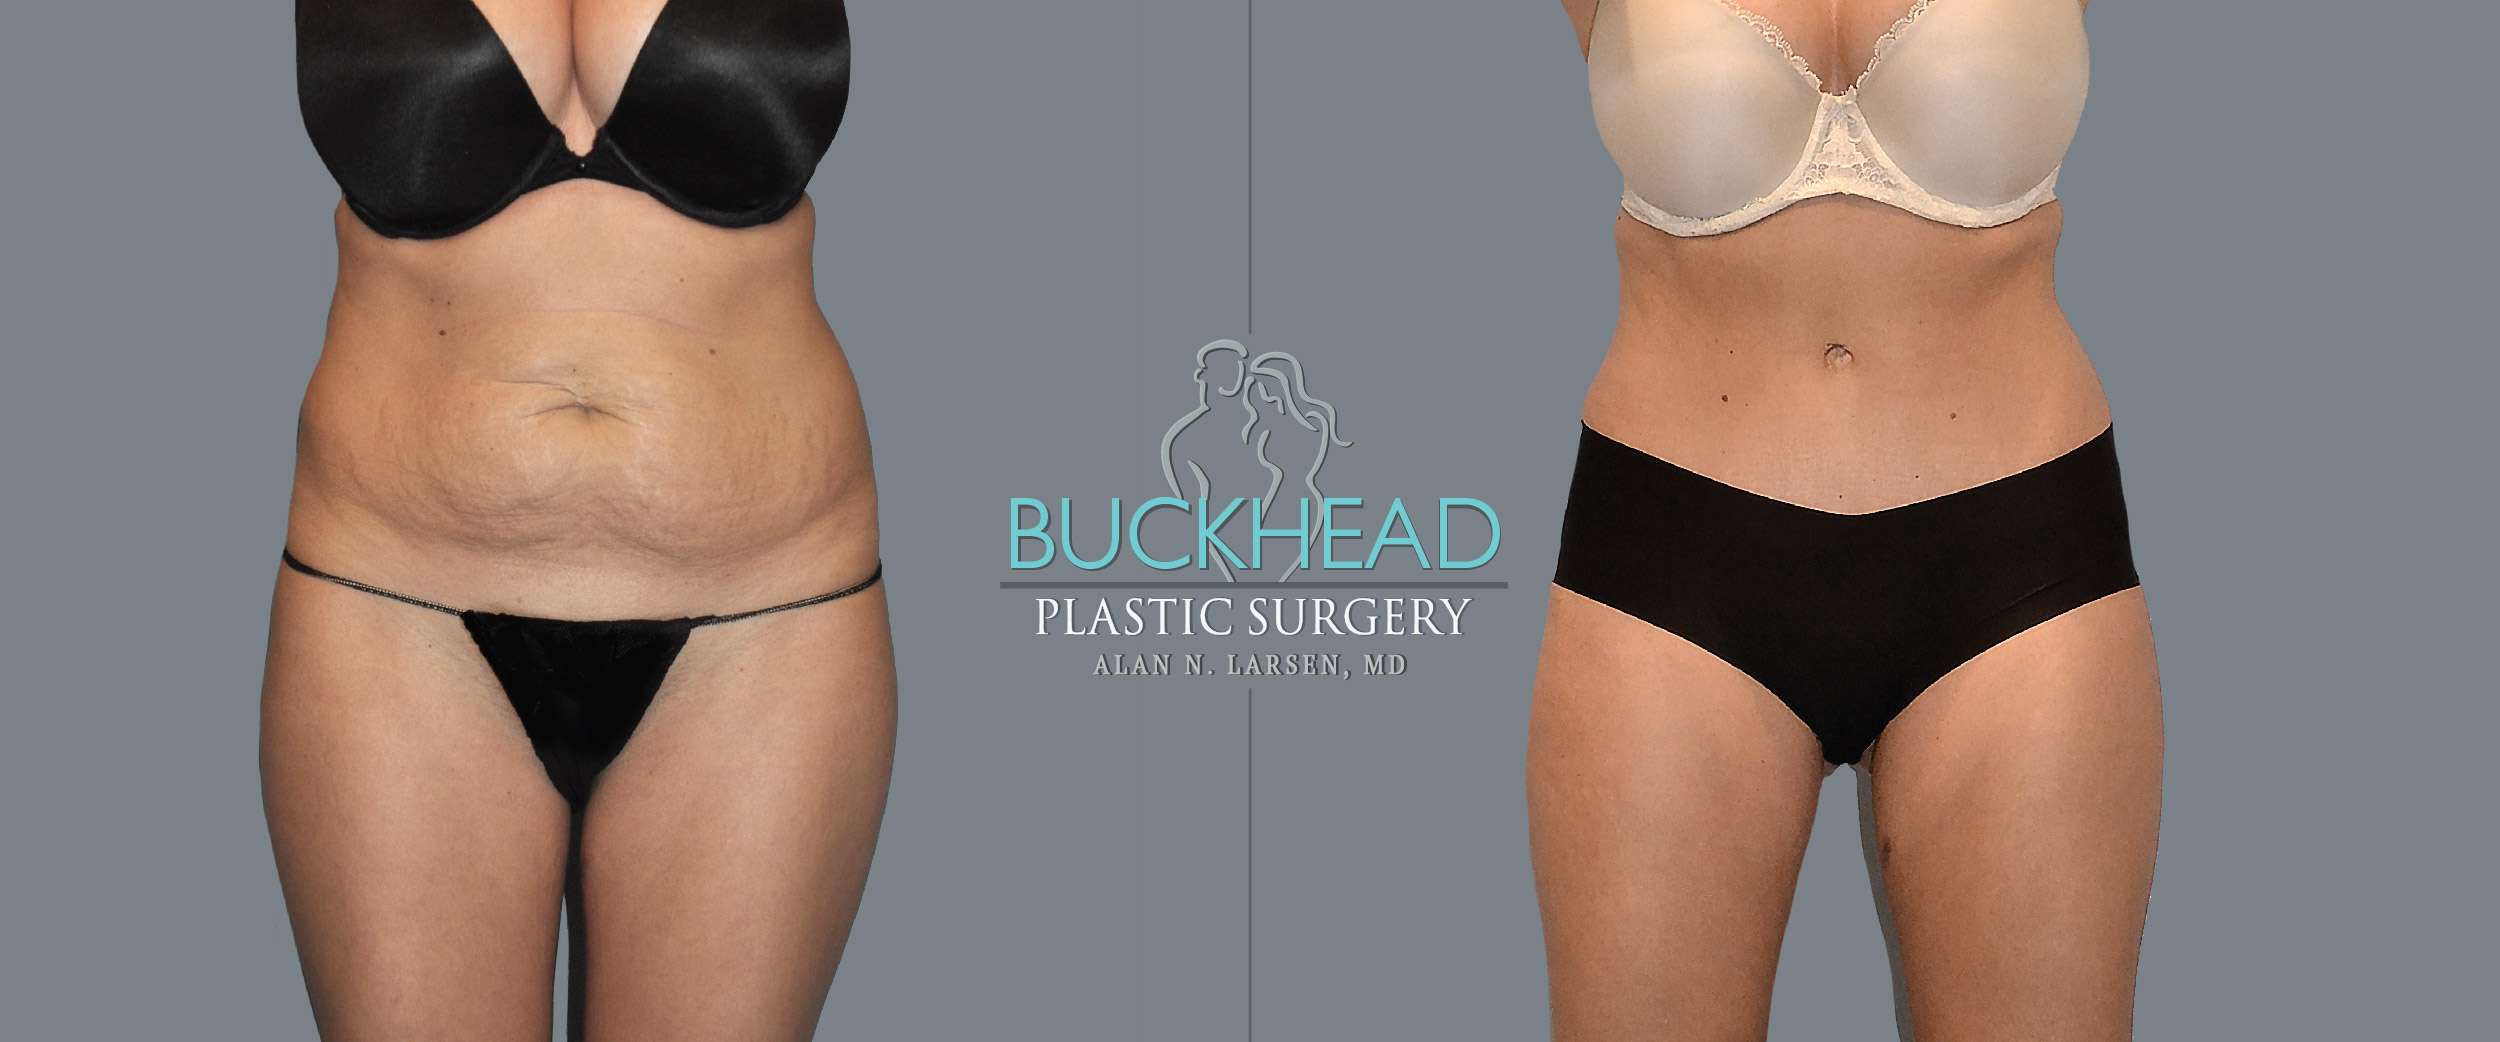 Before and After Photo Gallery | Liposuction - Hips & Flanks | Buckhead Plastic Surgery | Alan N. Larsen, MD | Board-Certified Plastic Surgeon | Atlanta GA